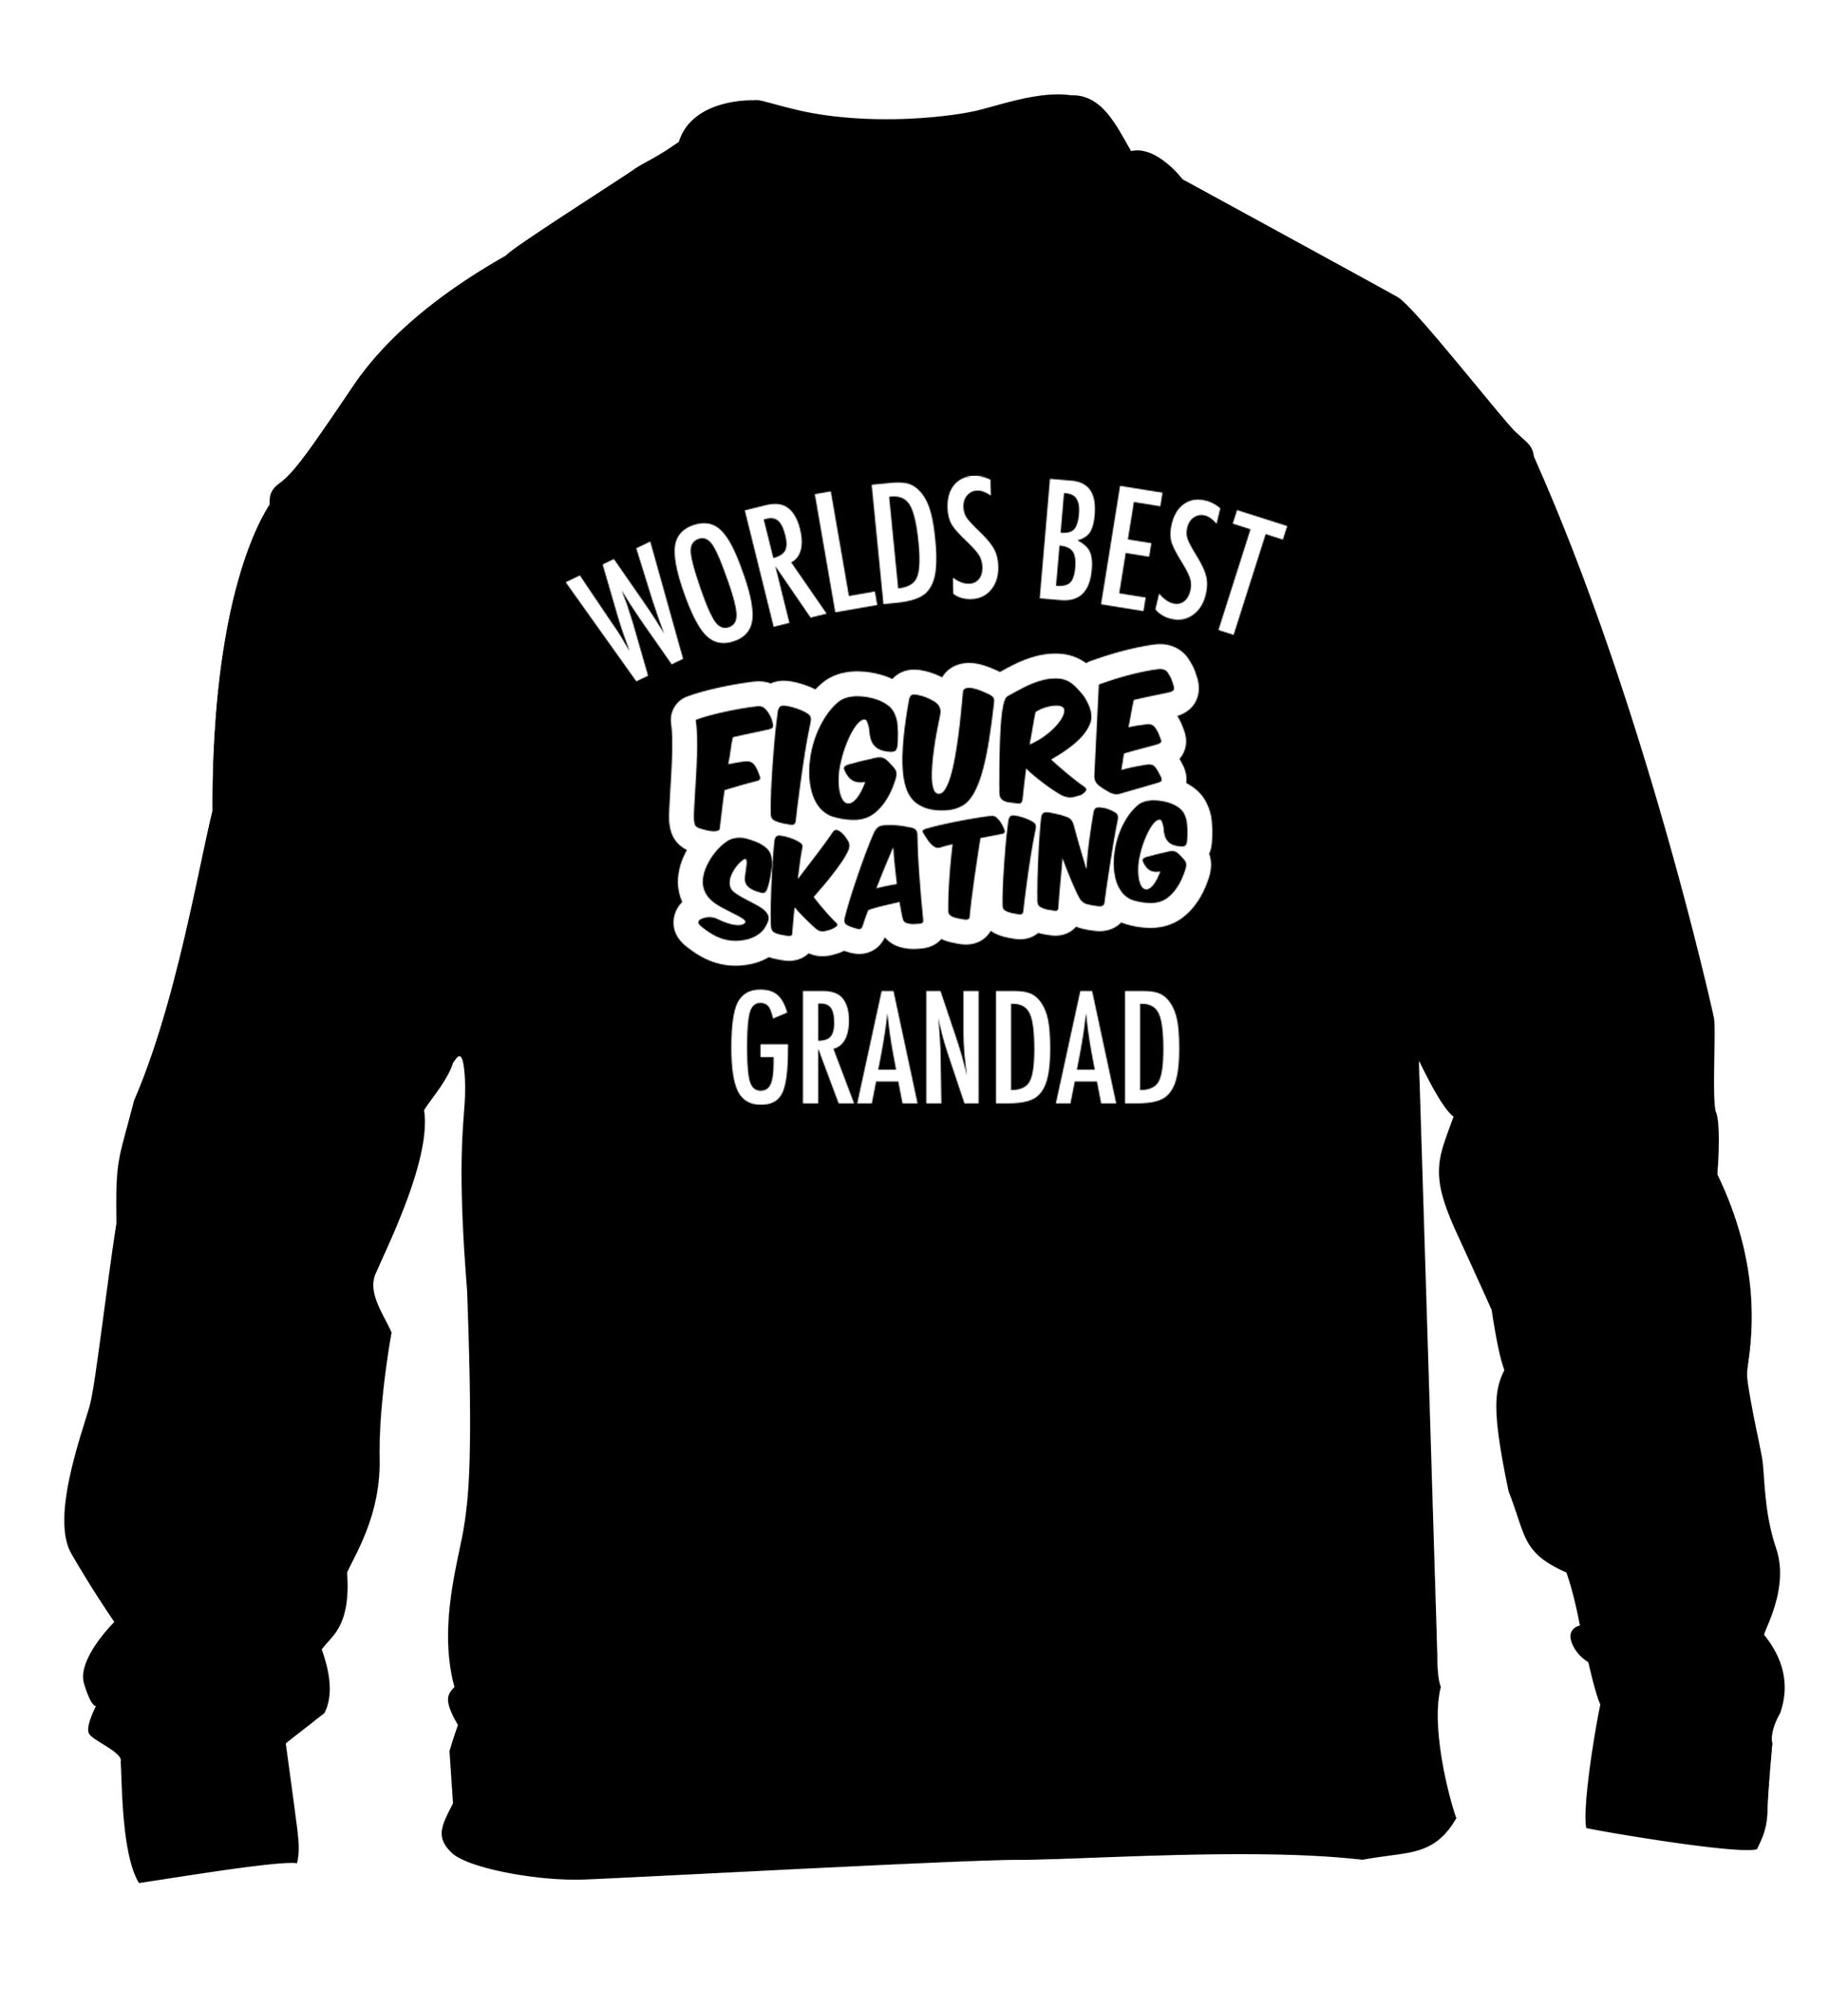 Worlds best figure skating grandad children's black sweater 12-14 Years